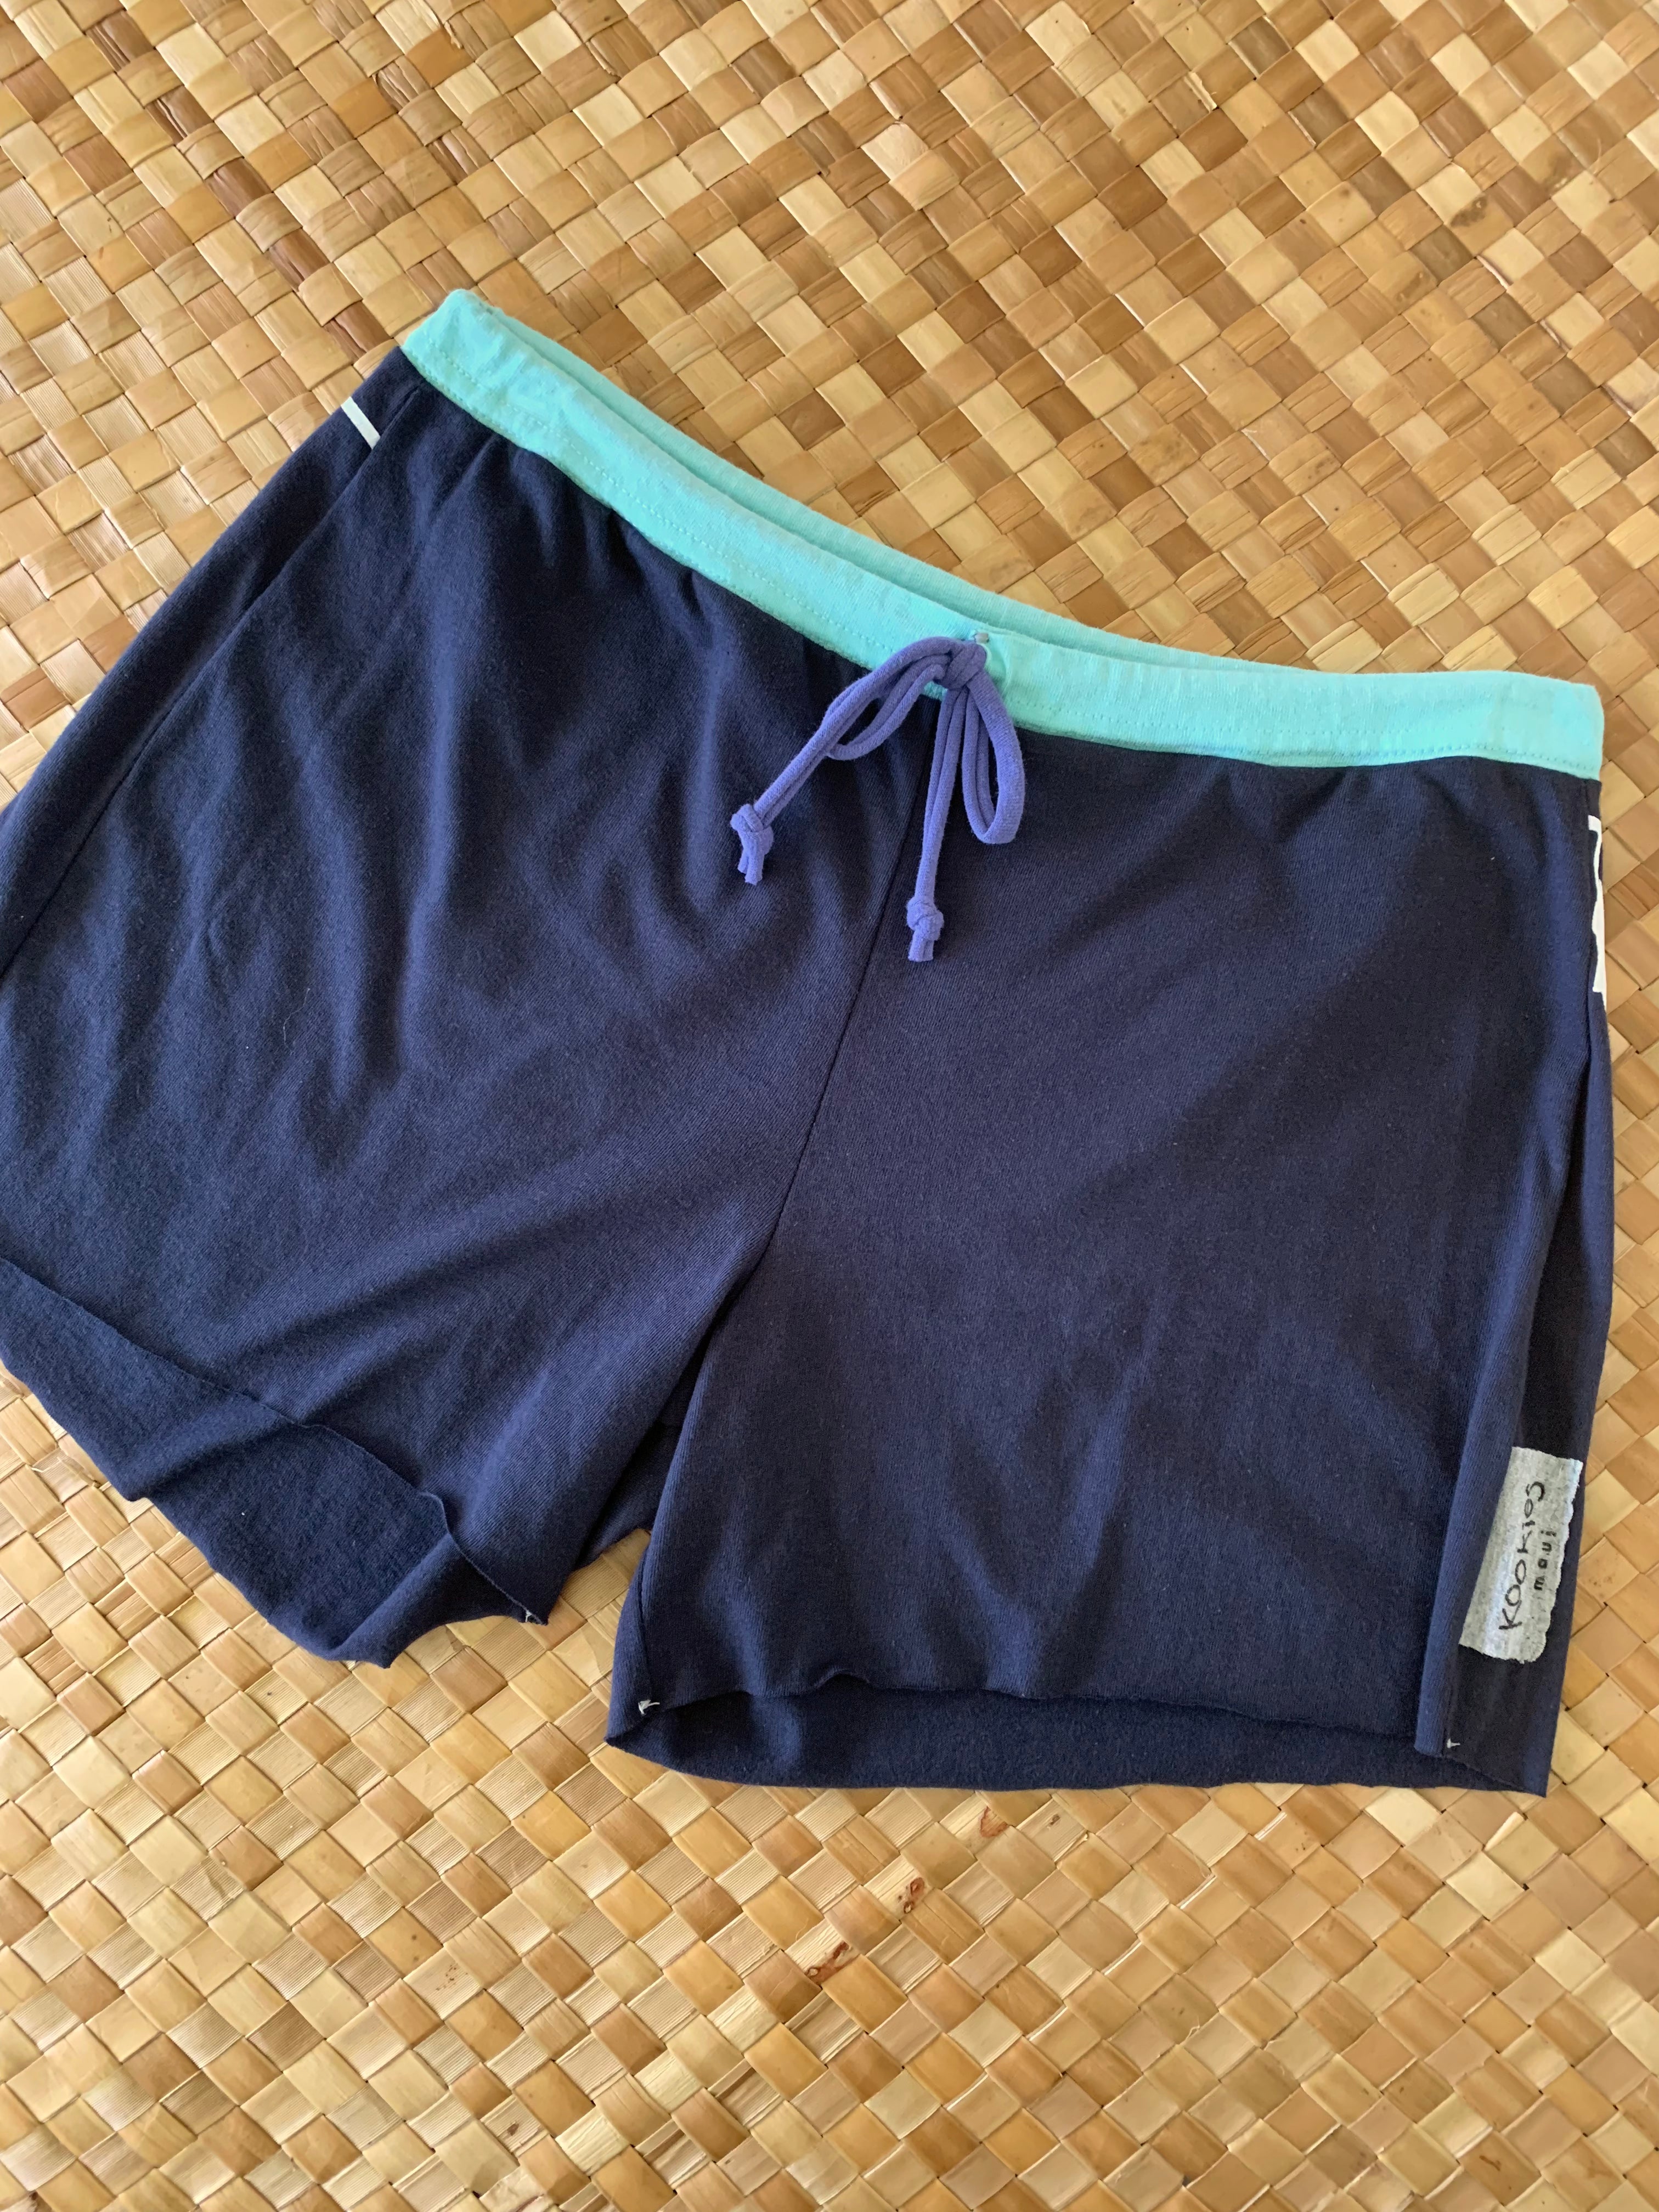 Ladies Size M "Navy & Tie Dye Zipline" Simple Shorty Shorts